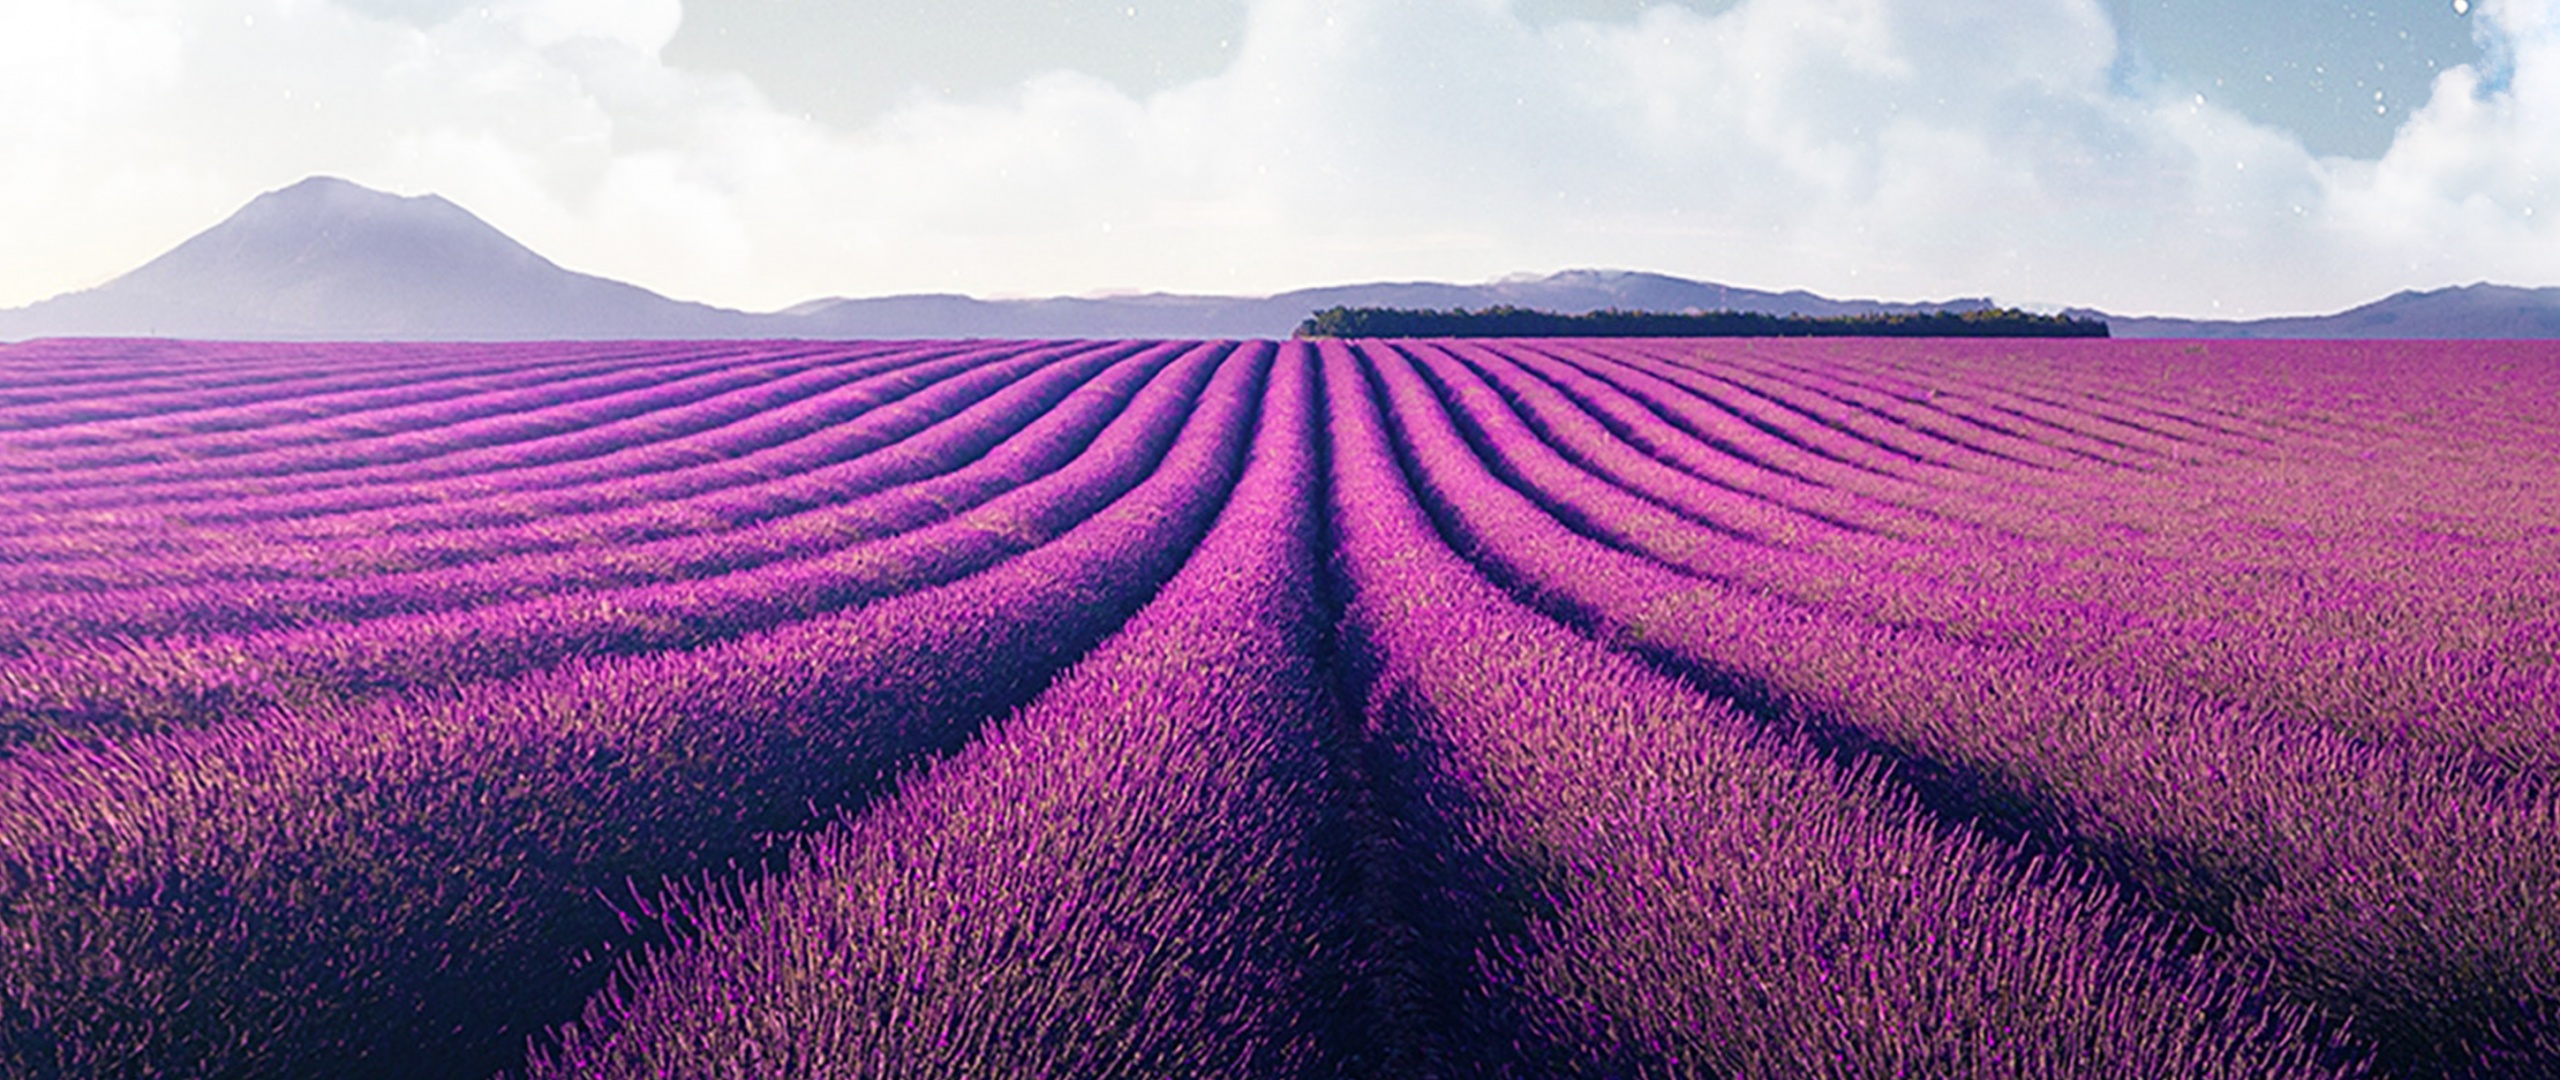 40 Lavender Fields Desktop Wallpaper  WallpaperSafari